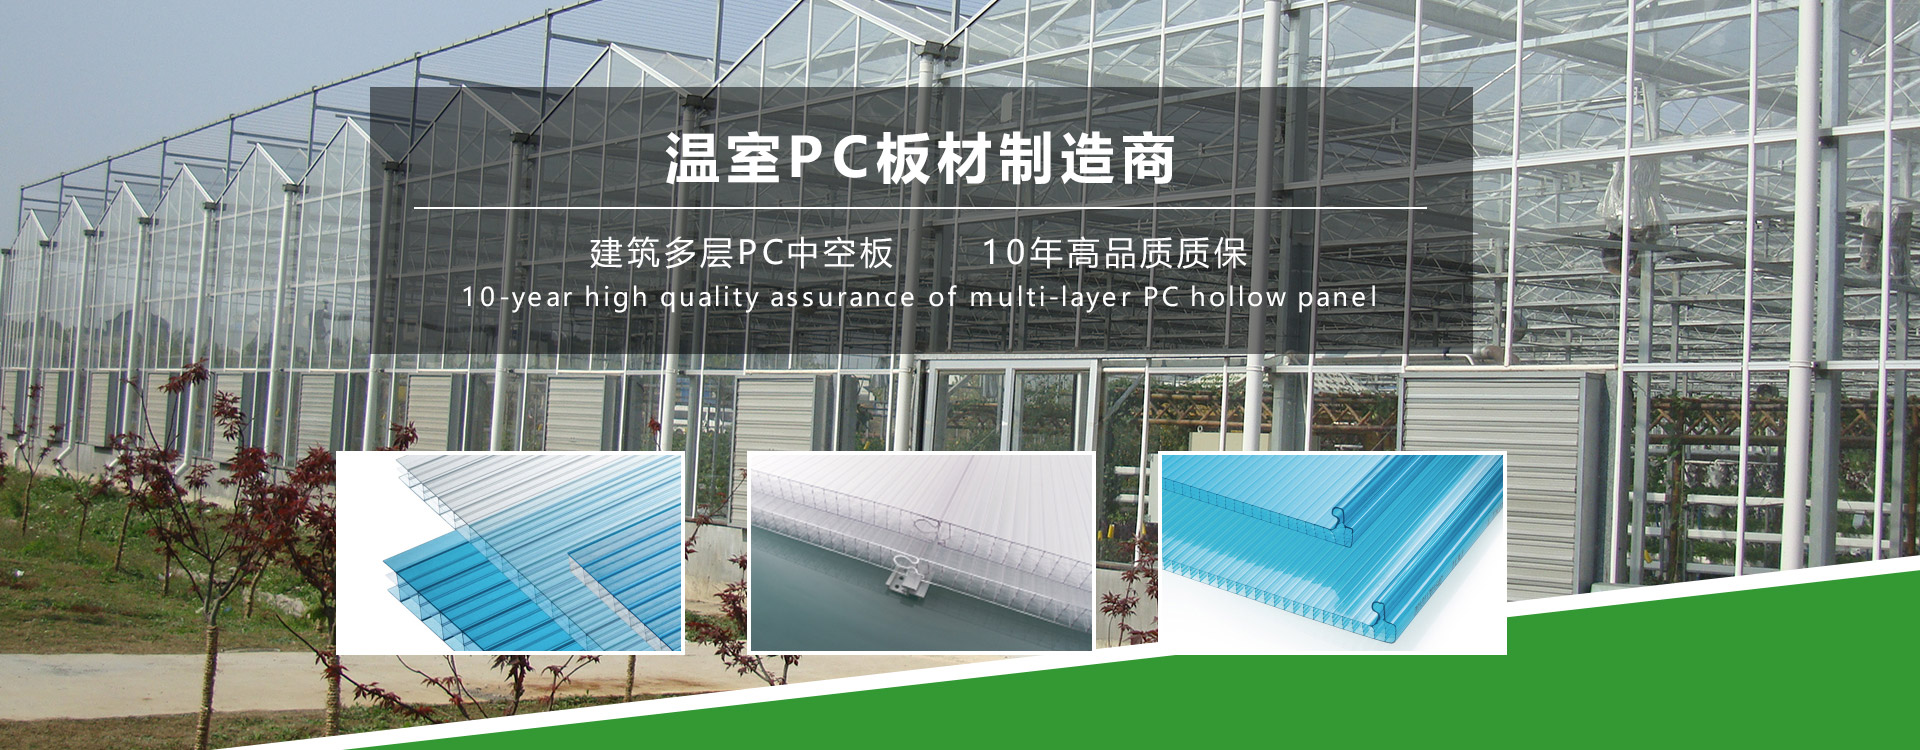 Pc阳光板 耐力板厂家 专业pc板材生产企业